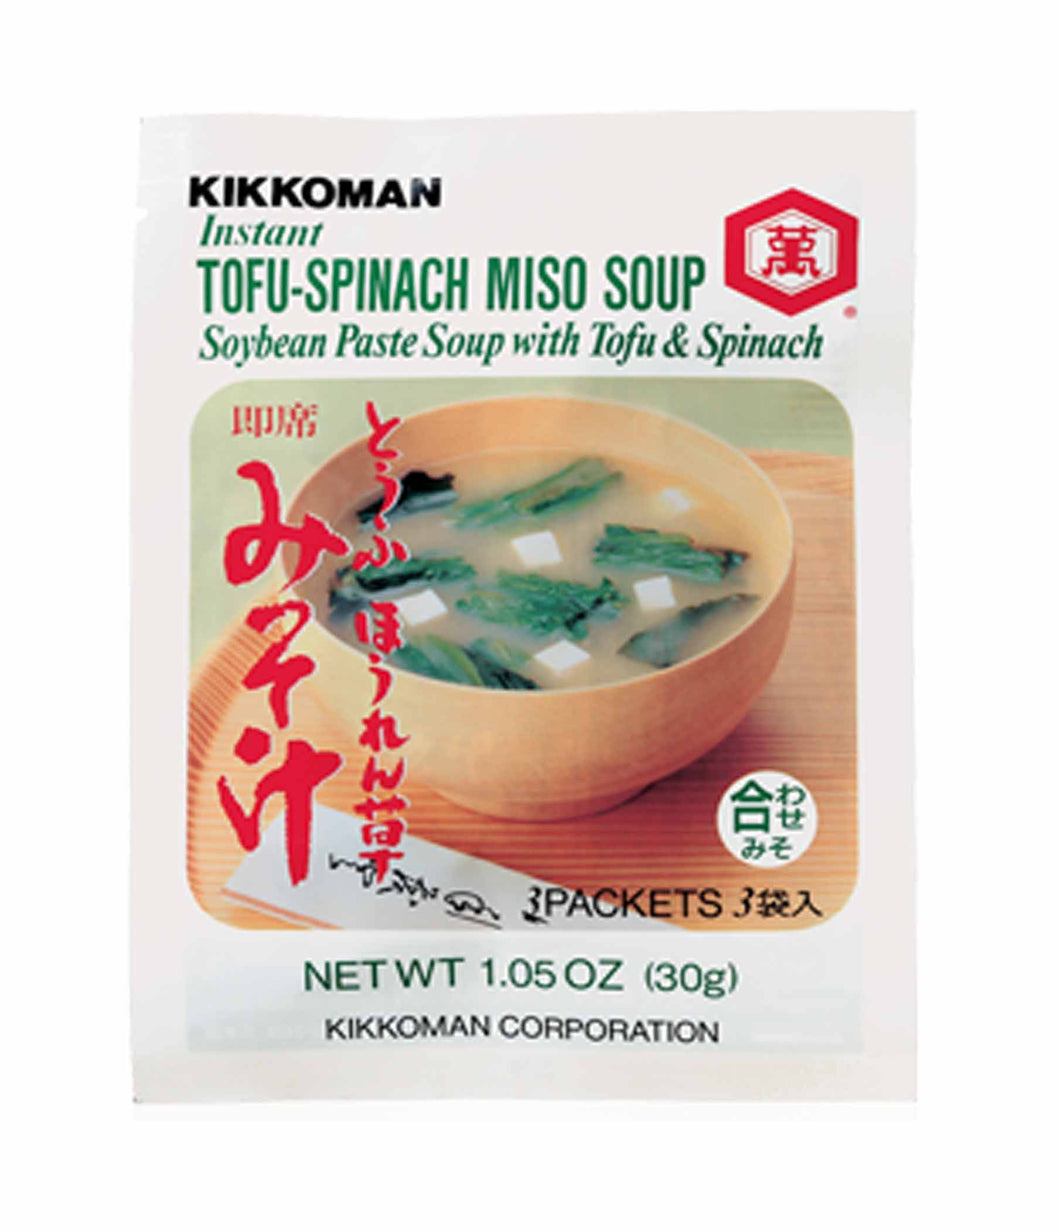 (Kikkoman) Tofu-Spinach Miso Soup 30g